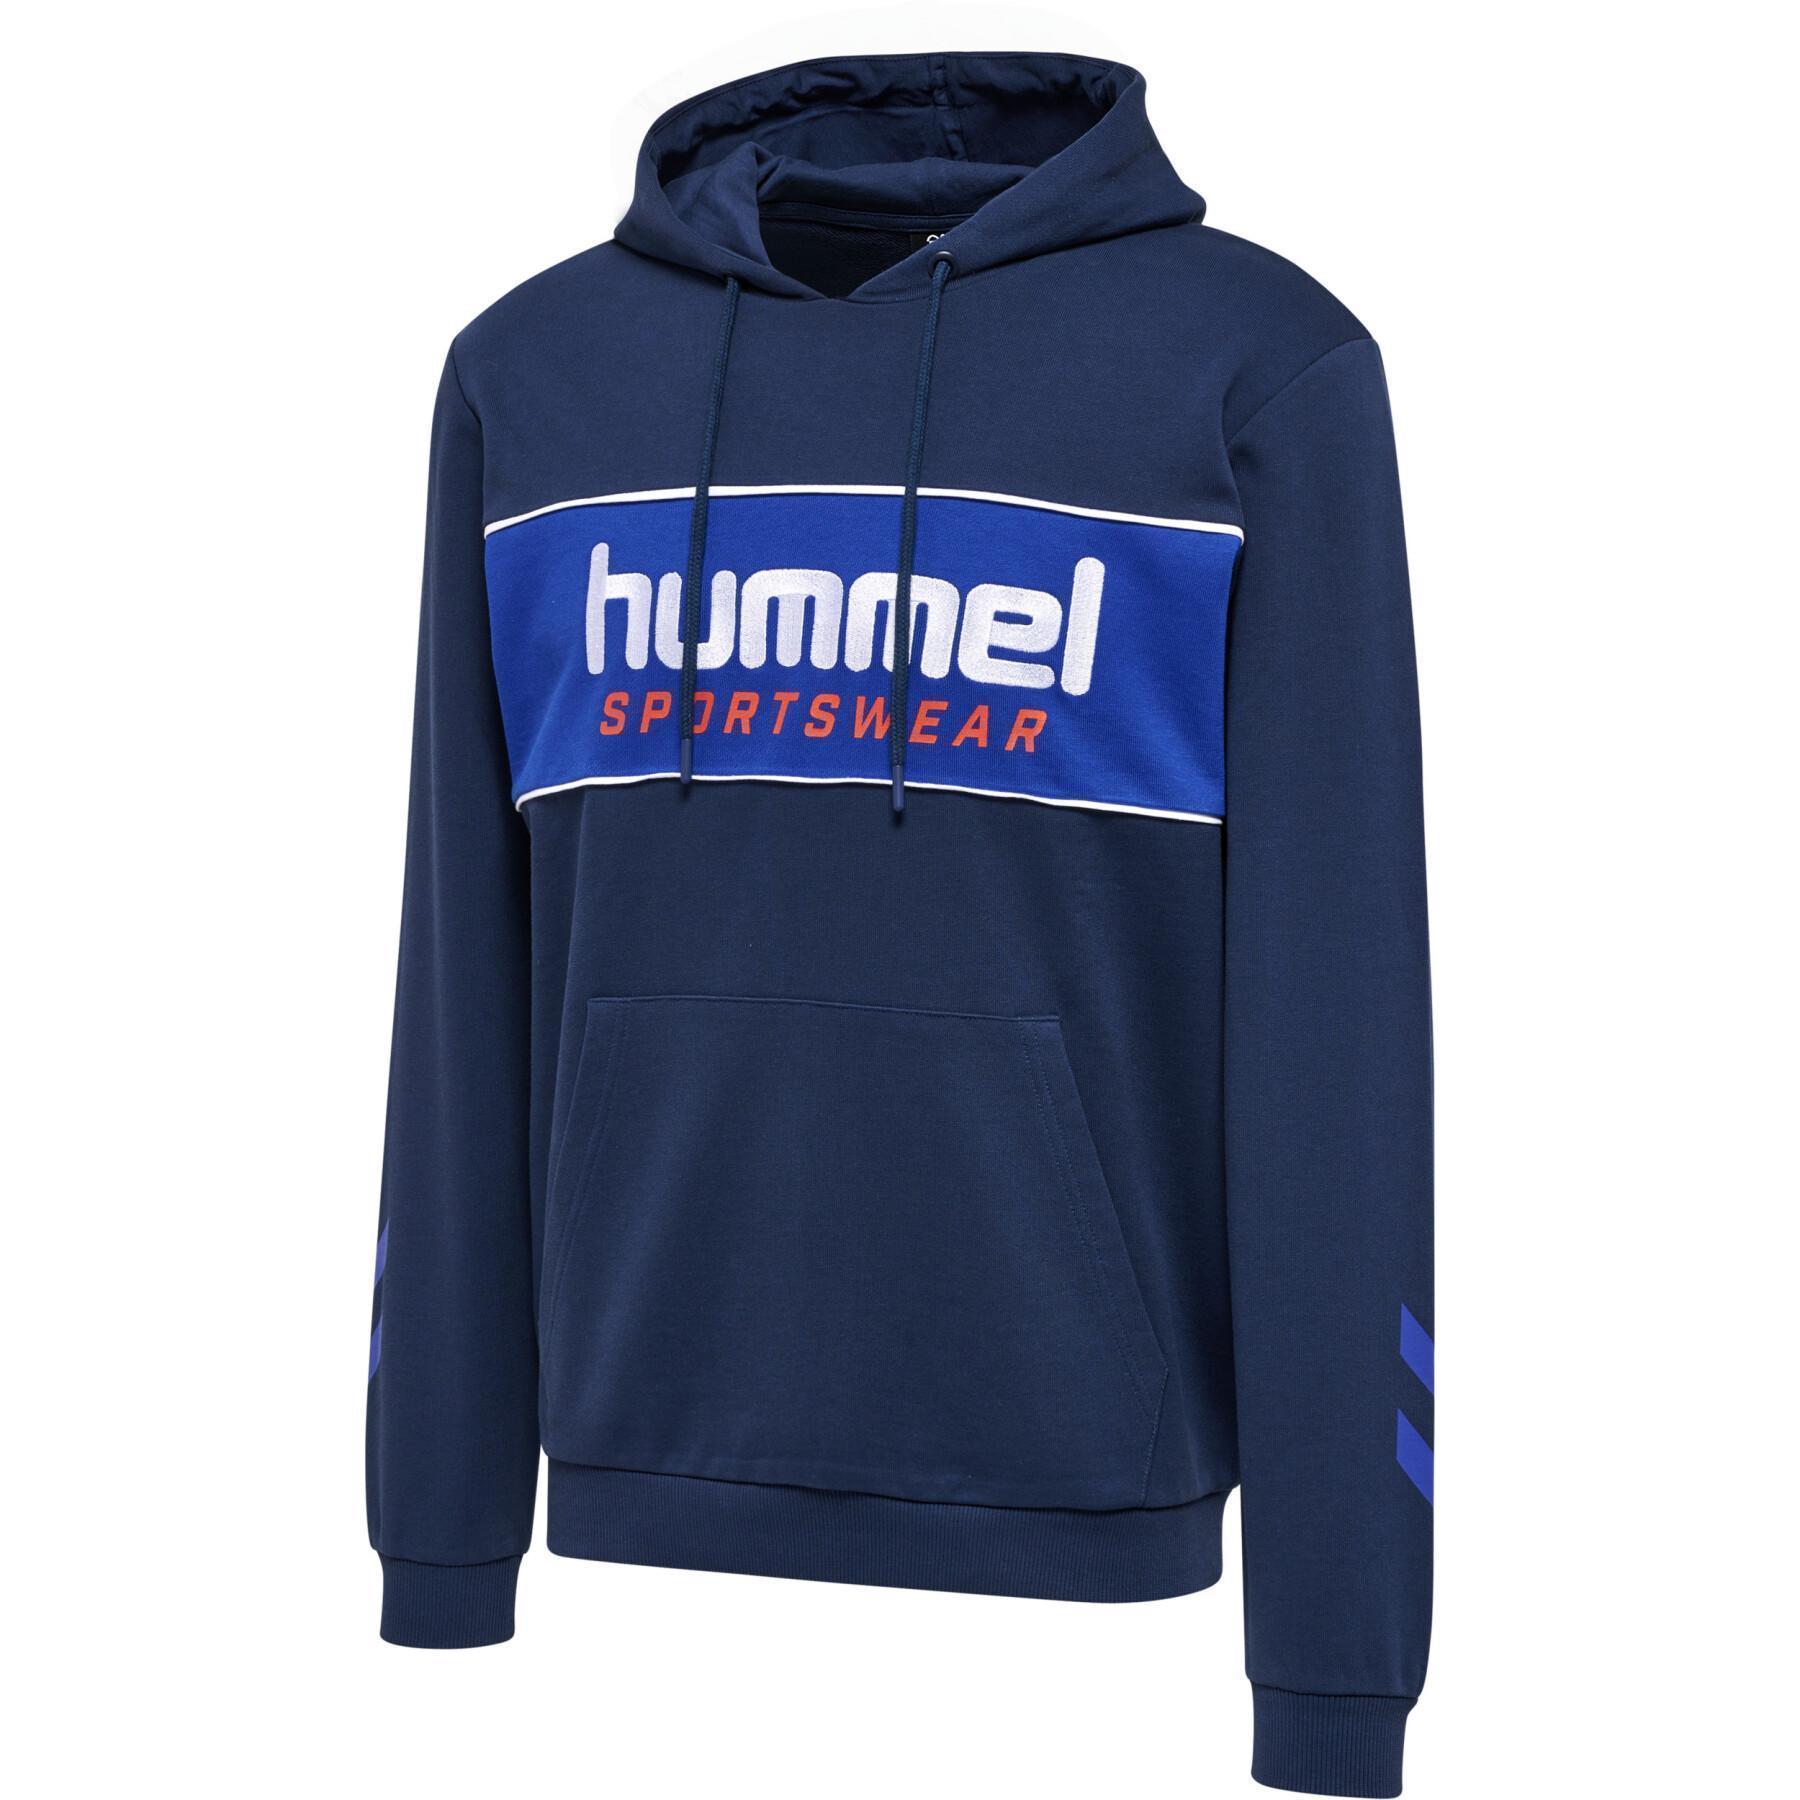 Lifestyle Hoodie Sweatshirts - Hummel - Legacy Julian Woman Lifestyle -